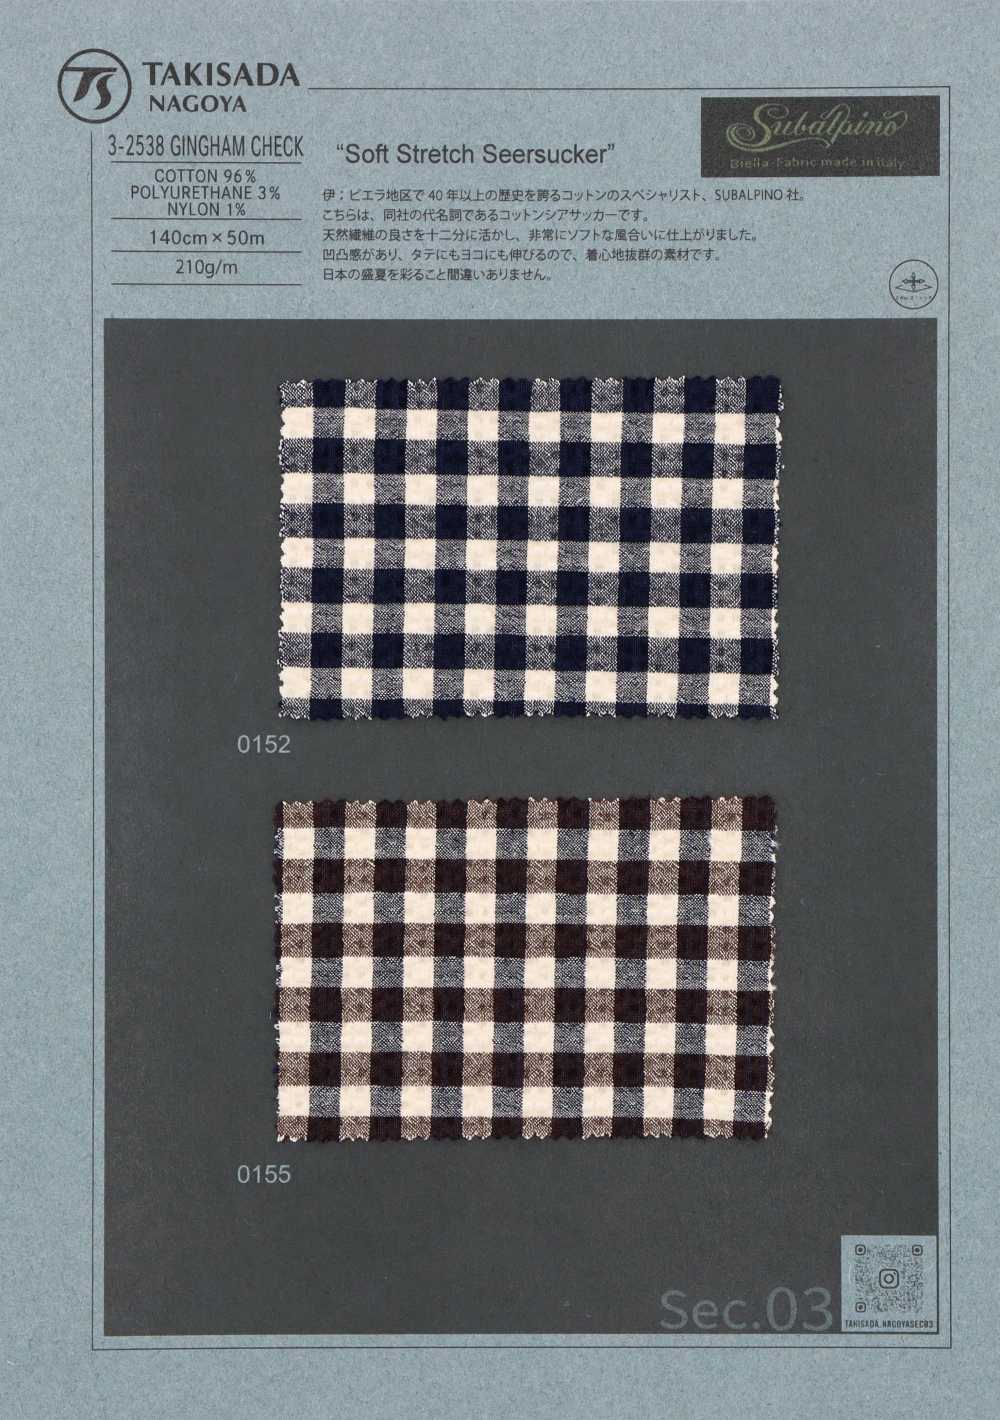 3-2538GINGHAM CHECK SUBALPINO Shear Vải Sọc Nhăn Gingham Kẻ Caro Takisada Nagoya